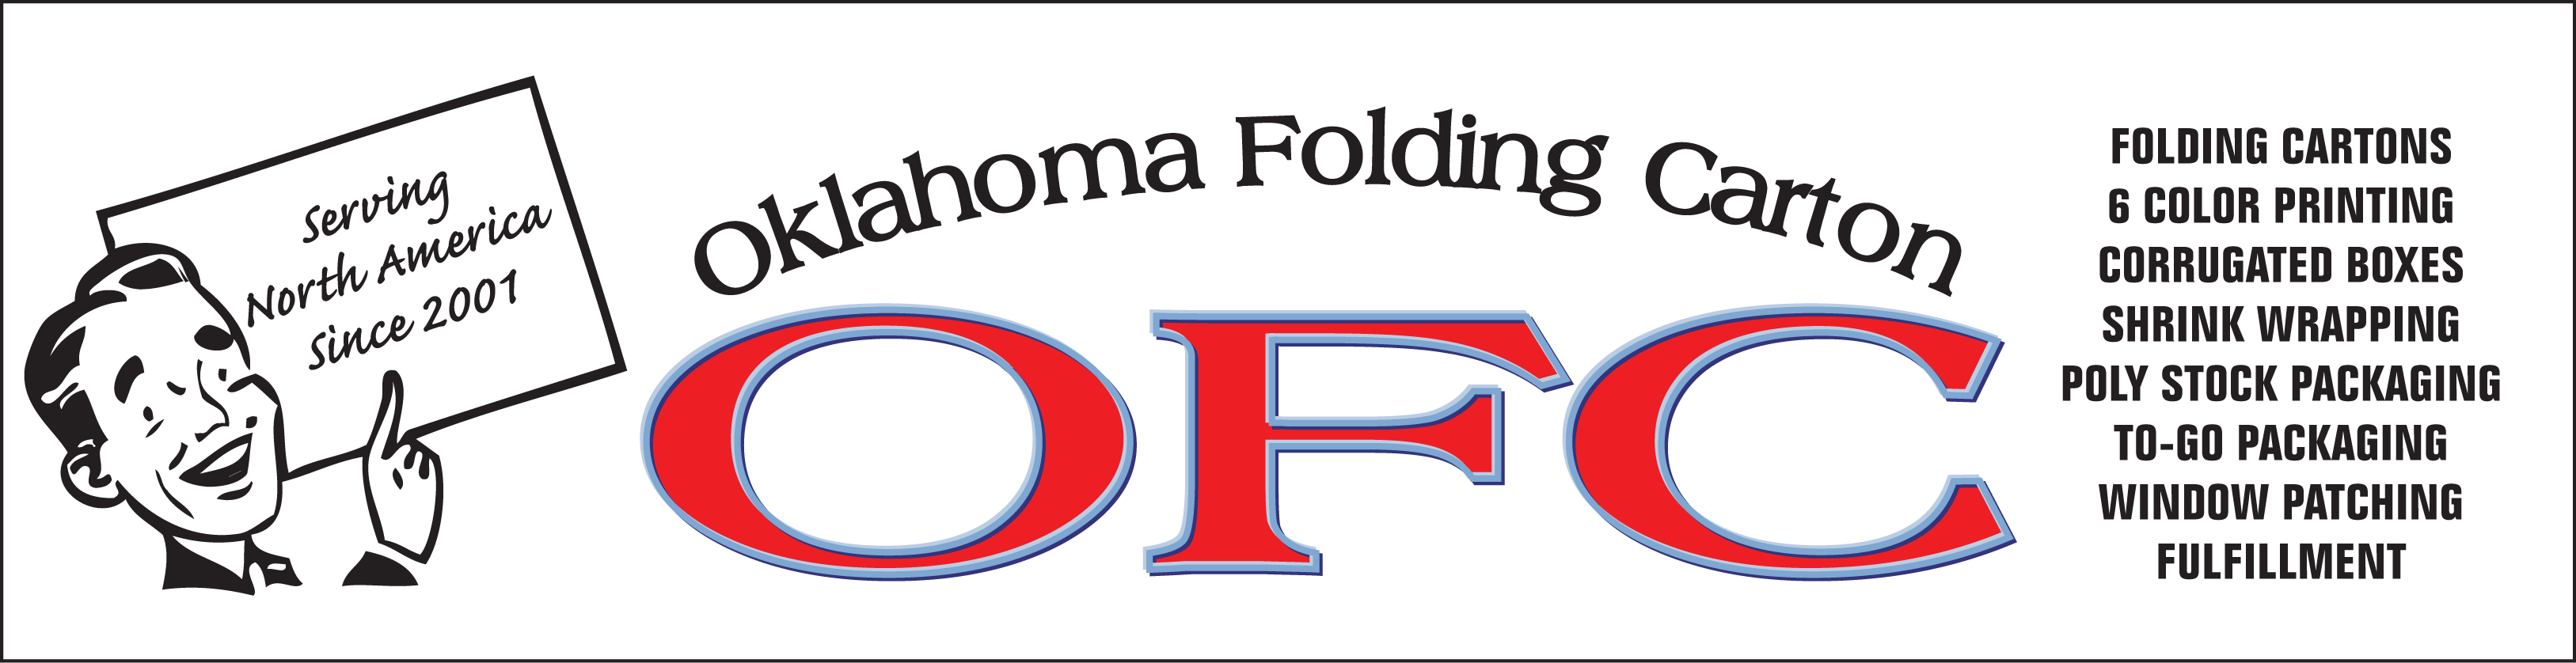 Oklahoma Folding Carton